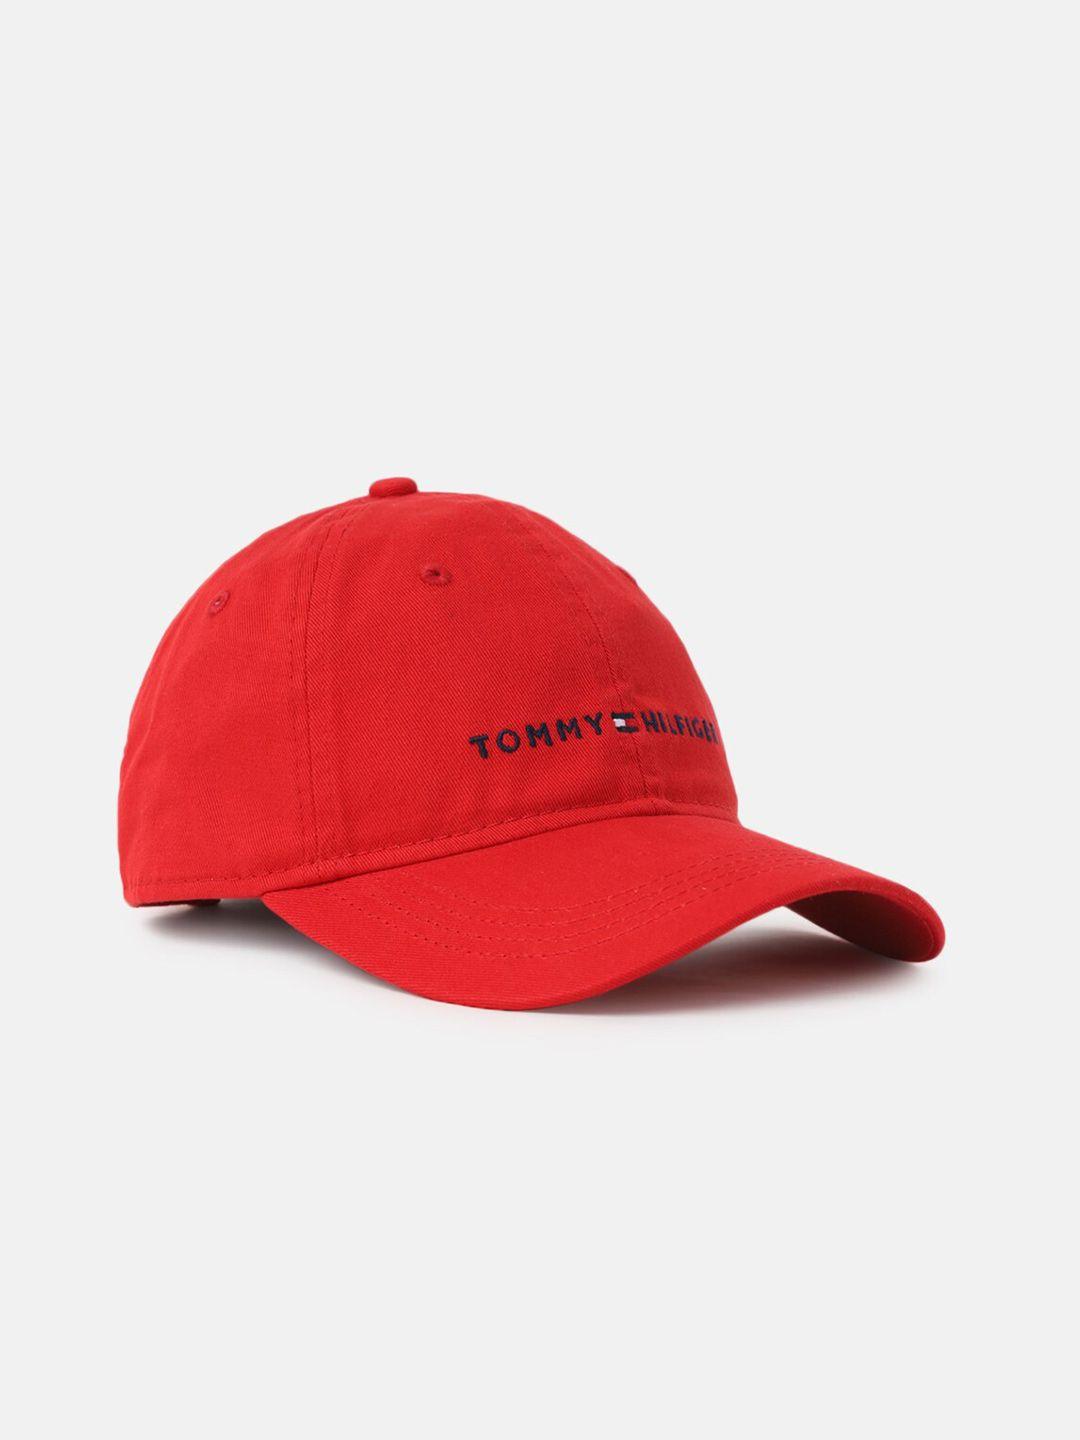 tommy-hilfiger-men-typography-printed-cotton-baseball-cap